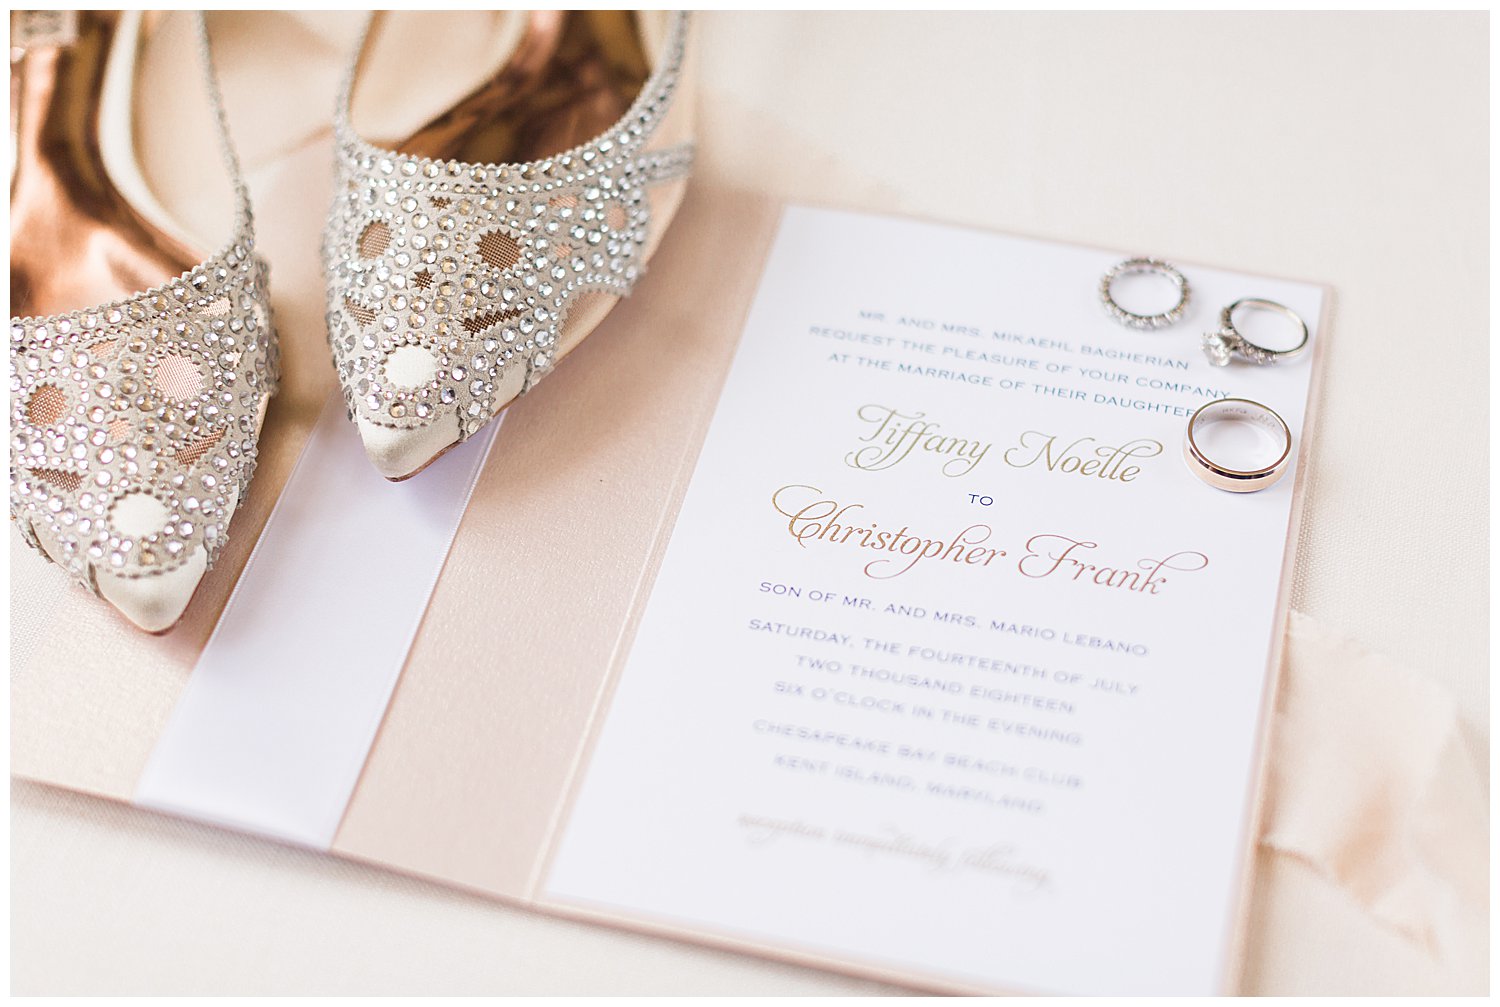 blush wedding invitation and shoes